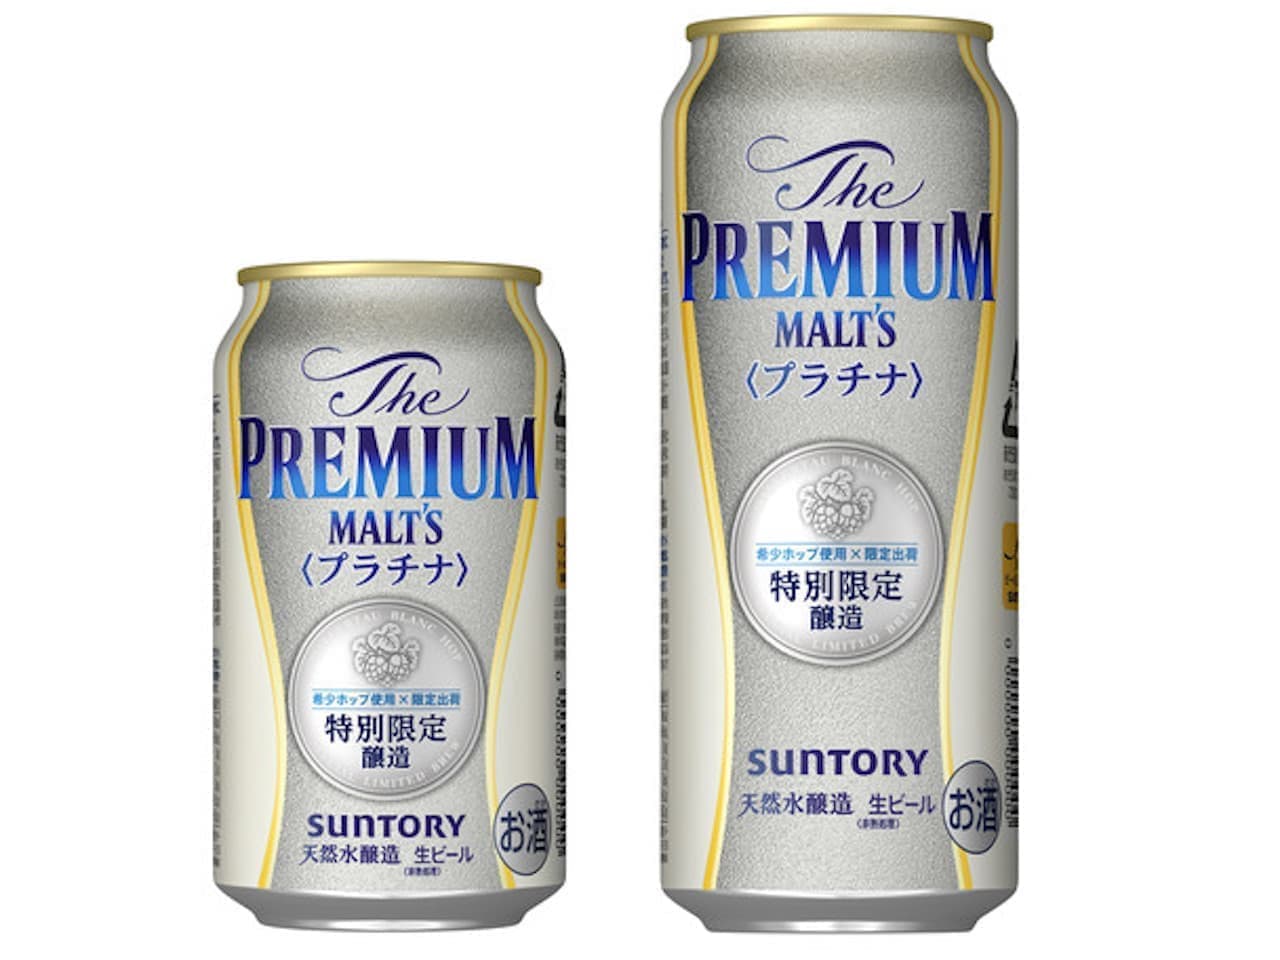 Limited quantity "The Premium Malt's [Platinum]" Limited to 7-ELEVEN & i Group